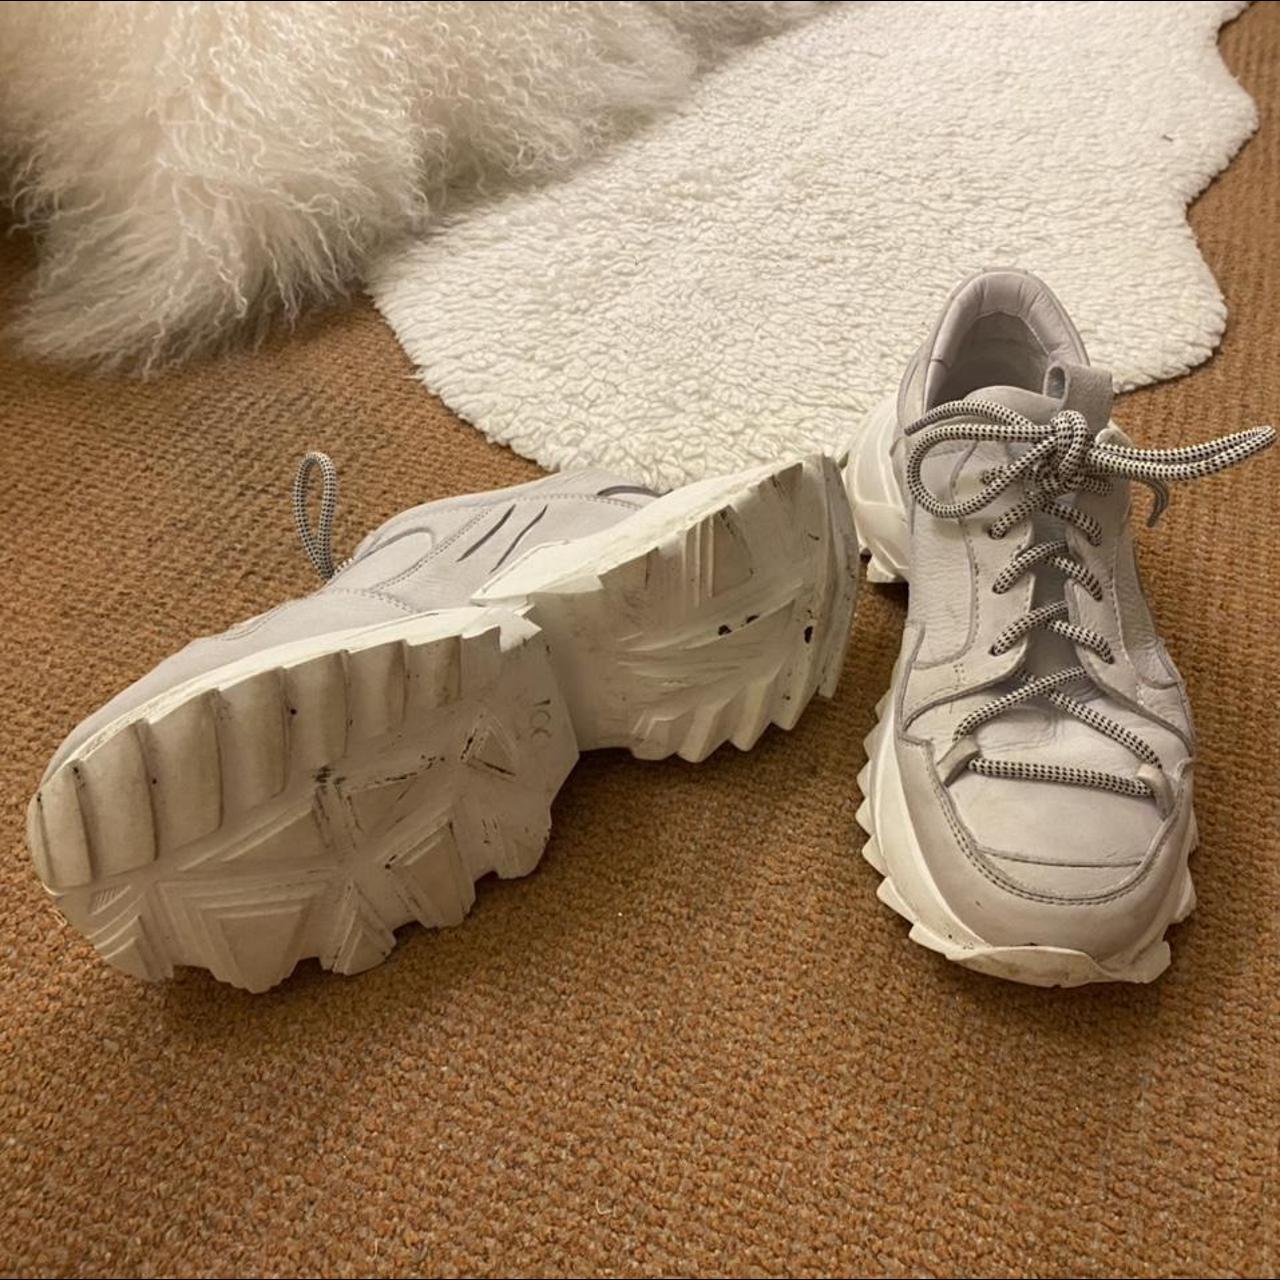 Product Image 3 - amazing condition
white leather trainers
uk size